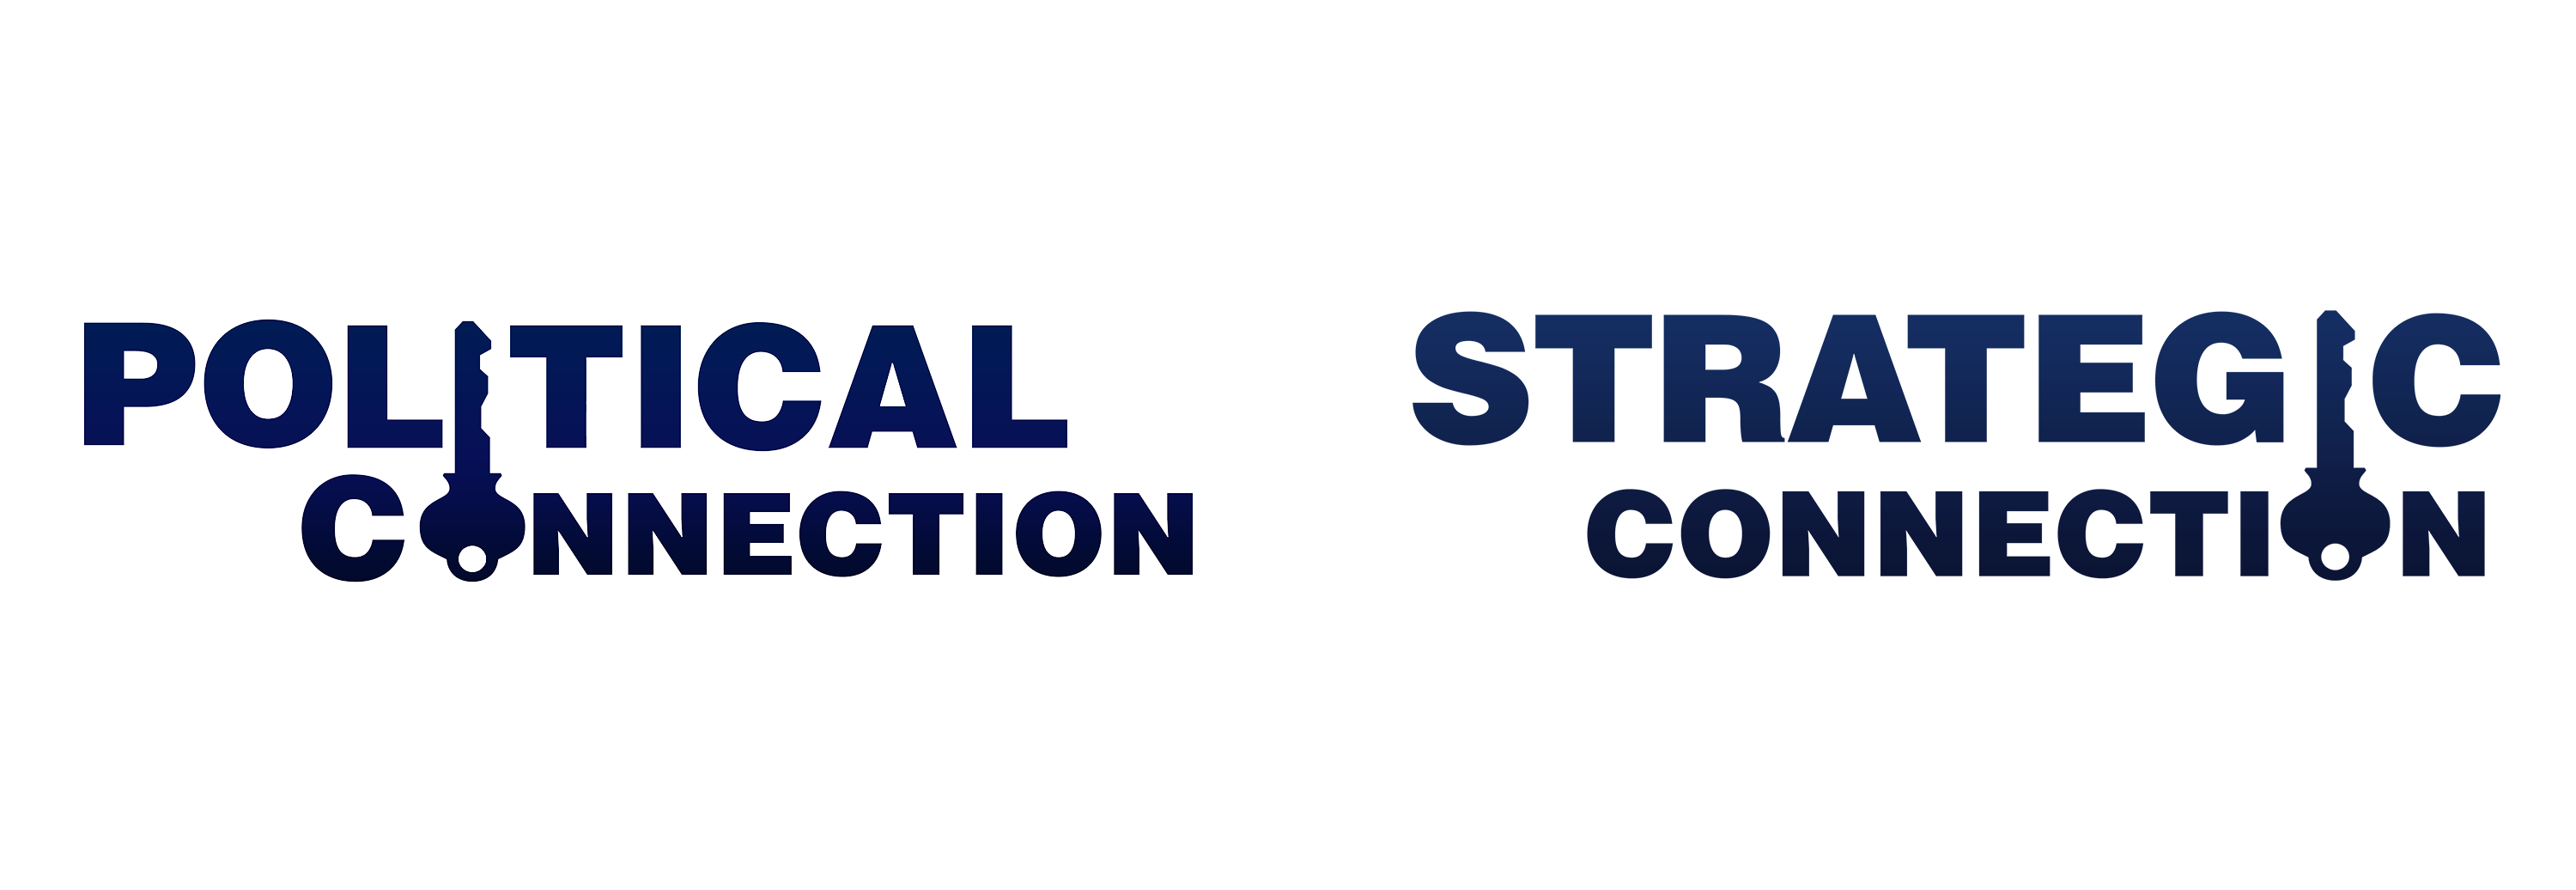 Political Connection LLC dba Strategic Connection